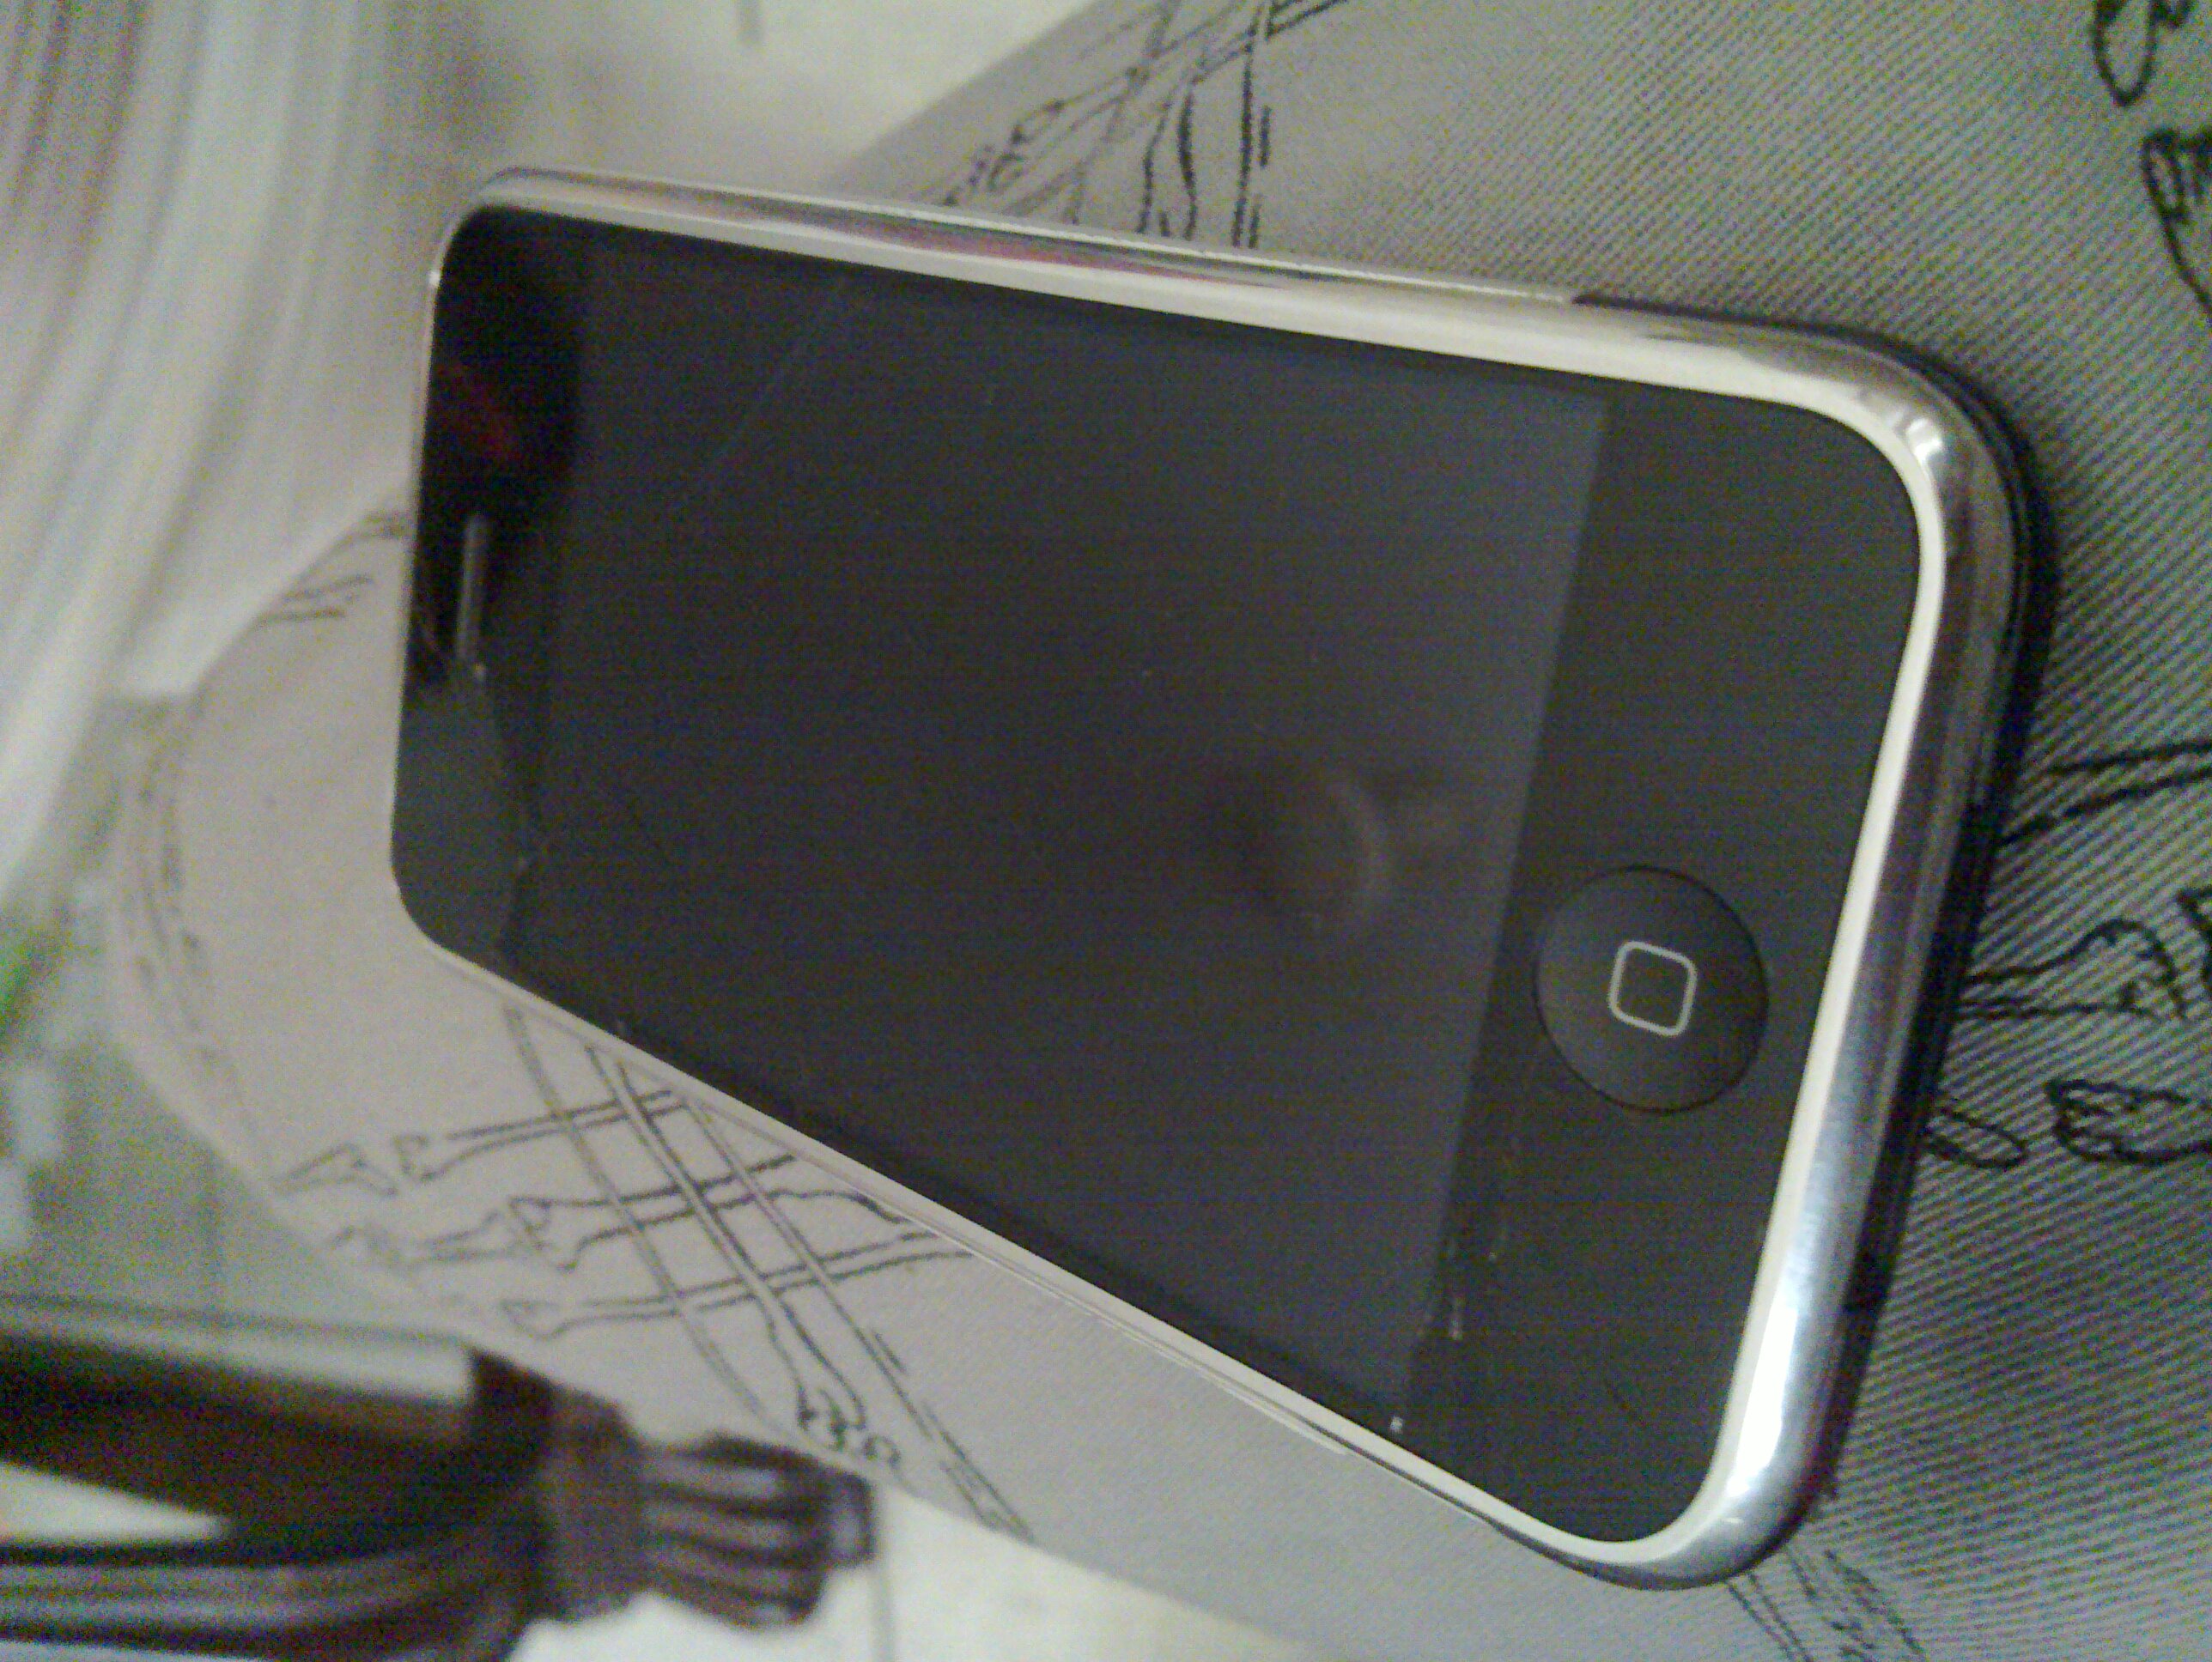 Iphone 2g 16gb for sale. Details inside. large image 2